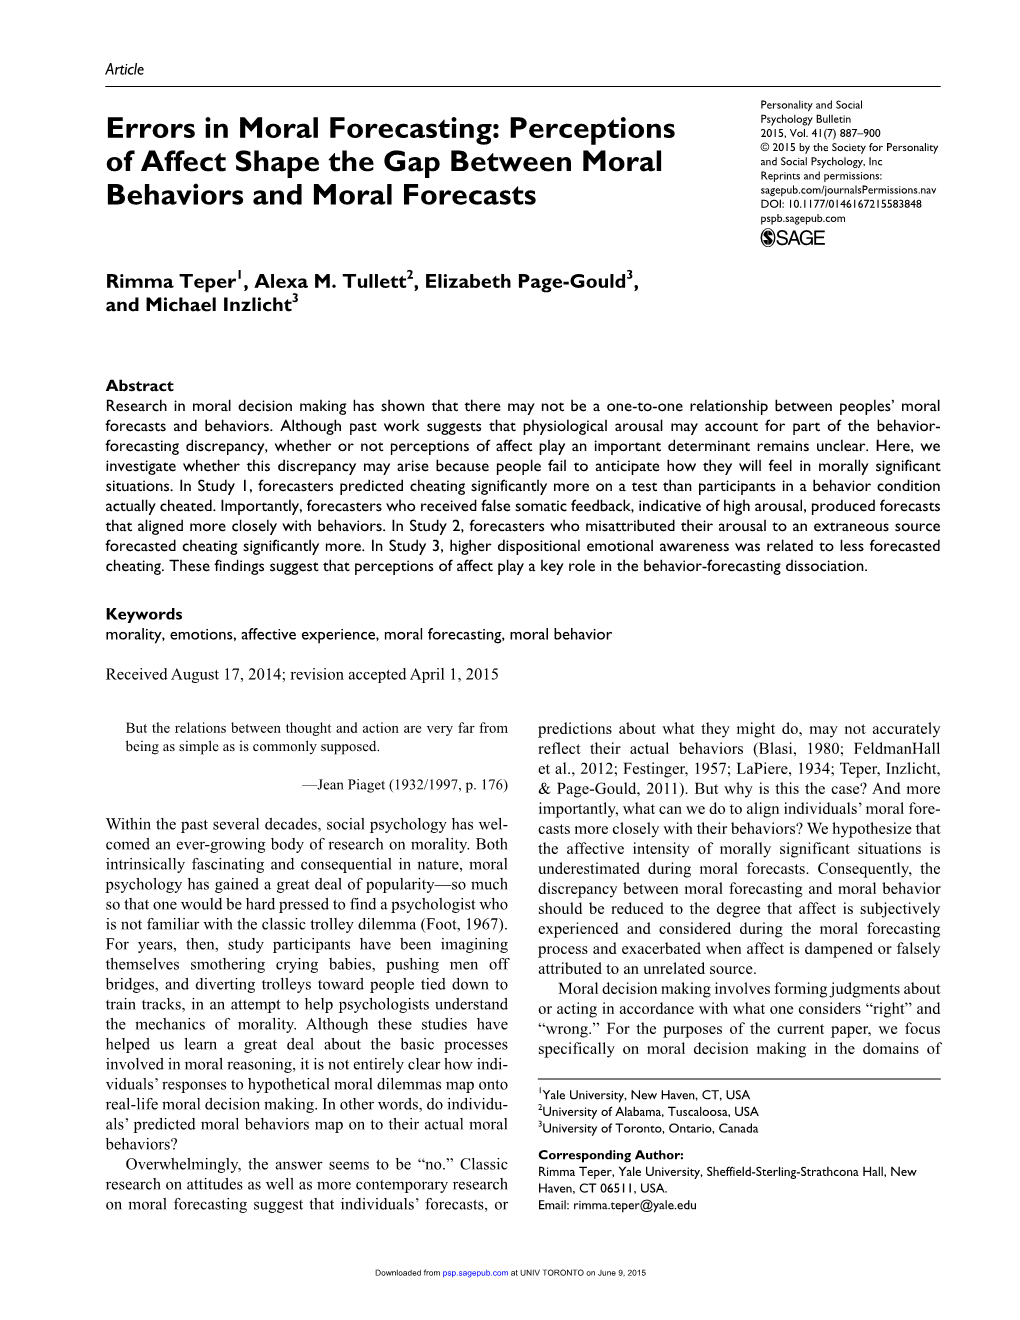 Errors in Moral Forecasting: Perceptions 2015, Vol